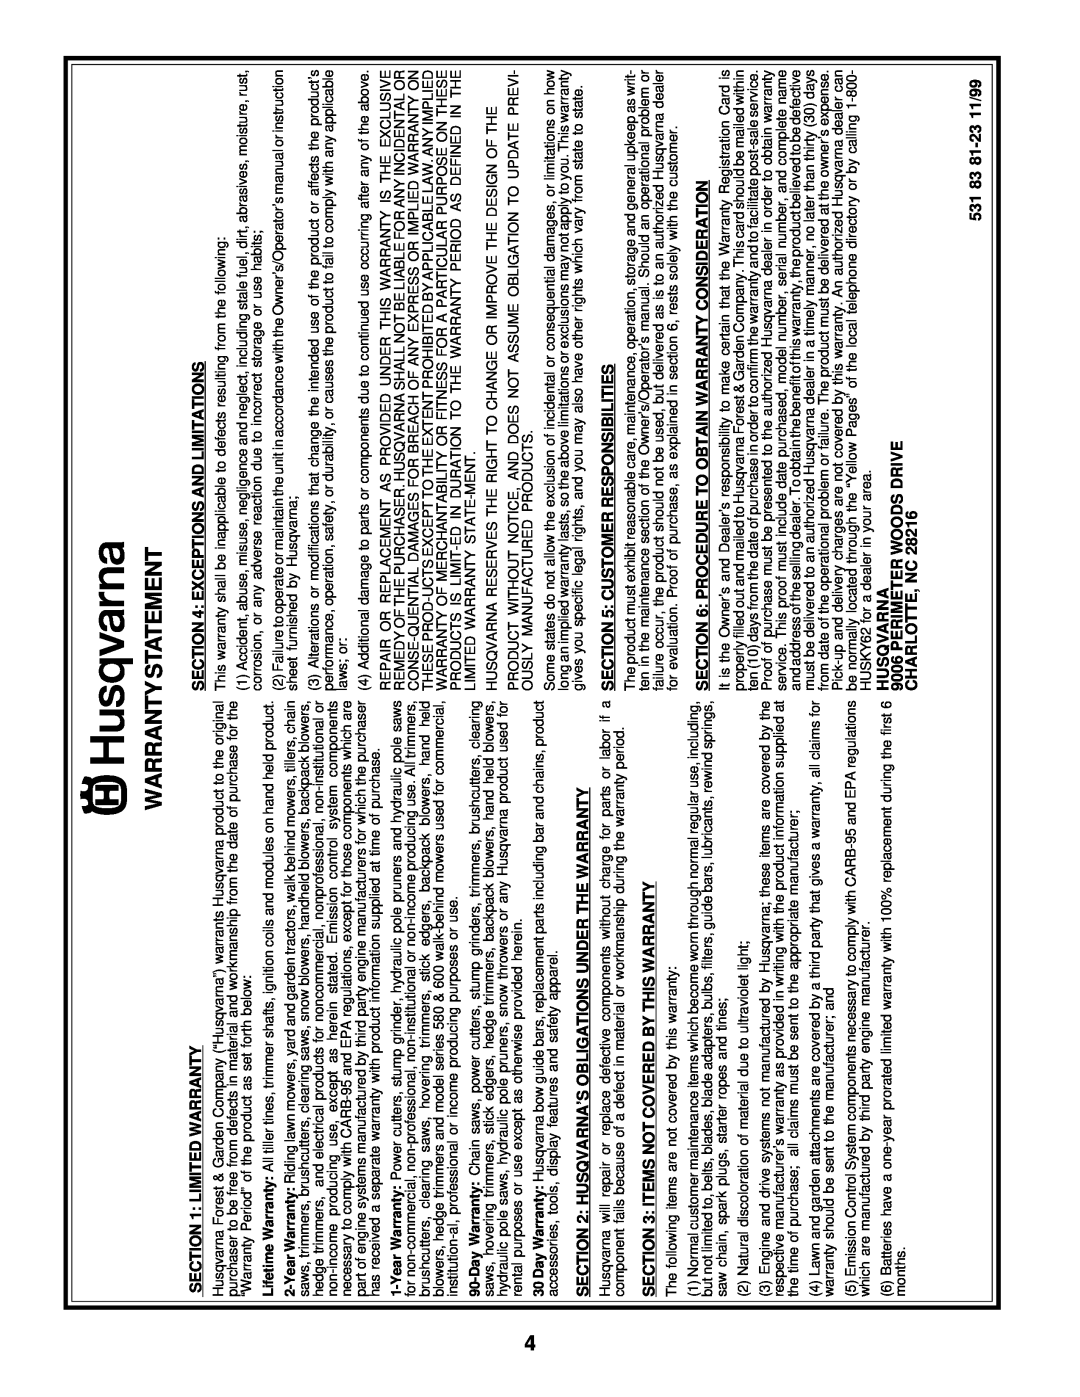 Husqvarna 6022CH Warranty Statement, Limited Warranty, Husqvarna’S Obligations Under The Warranty, 531 83 81-23 11/99 